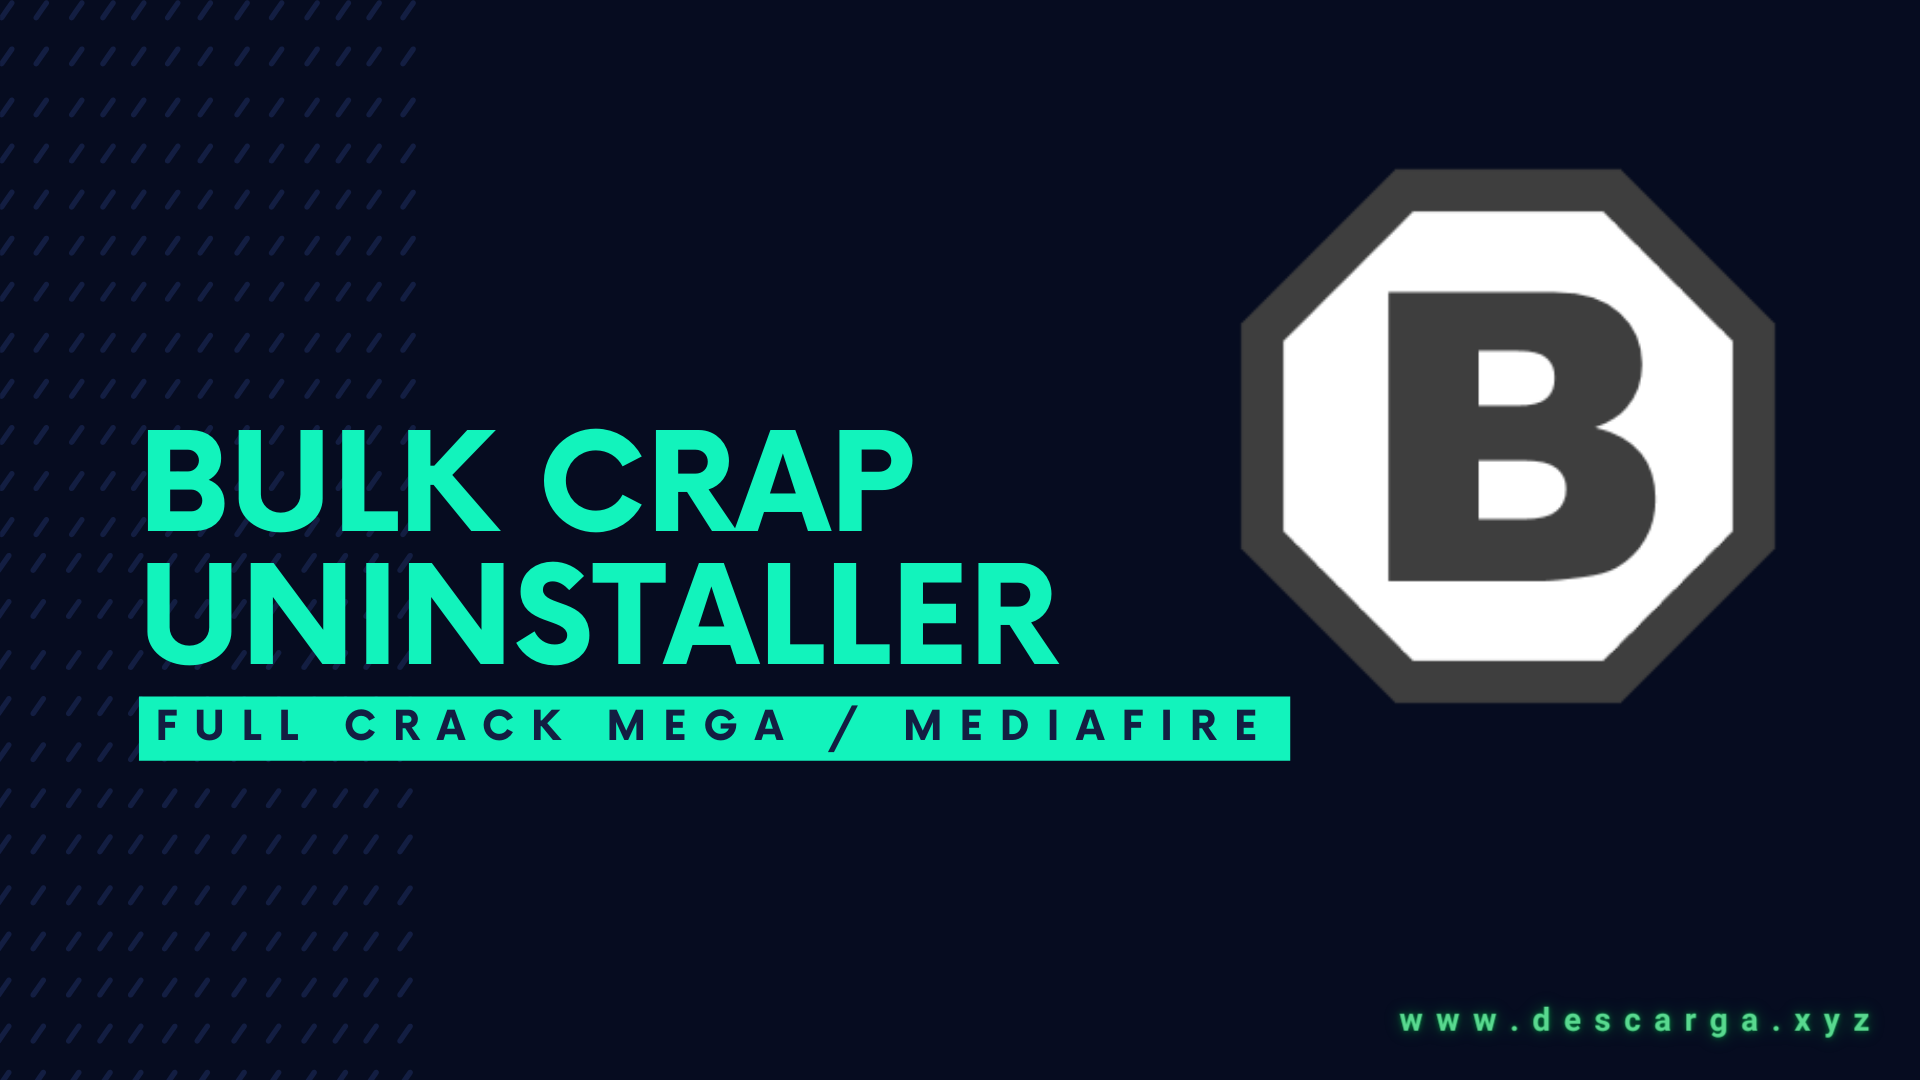 BCUninstaller Bulk Crap Uninstaller Full Crack Descargar Gratis por Mega